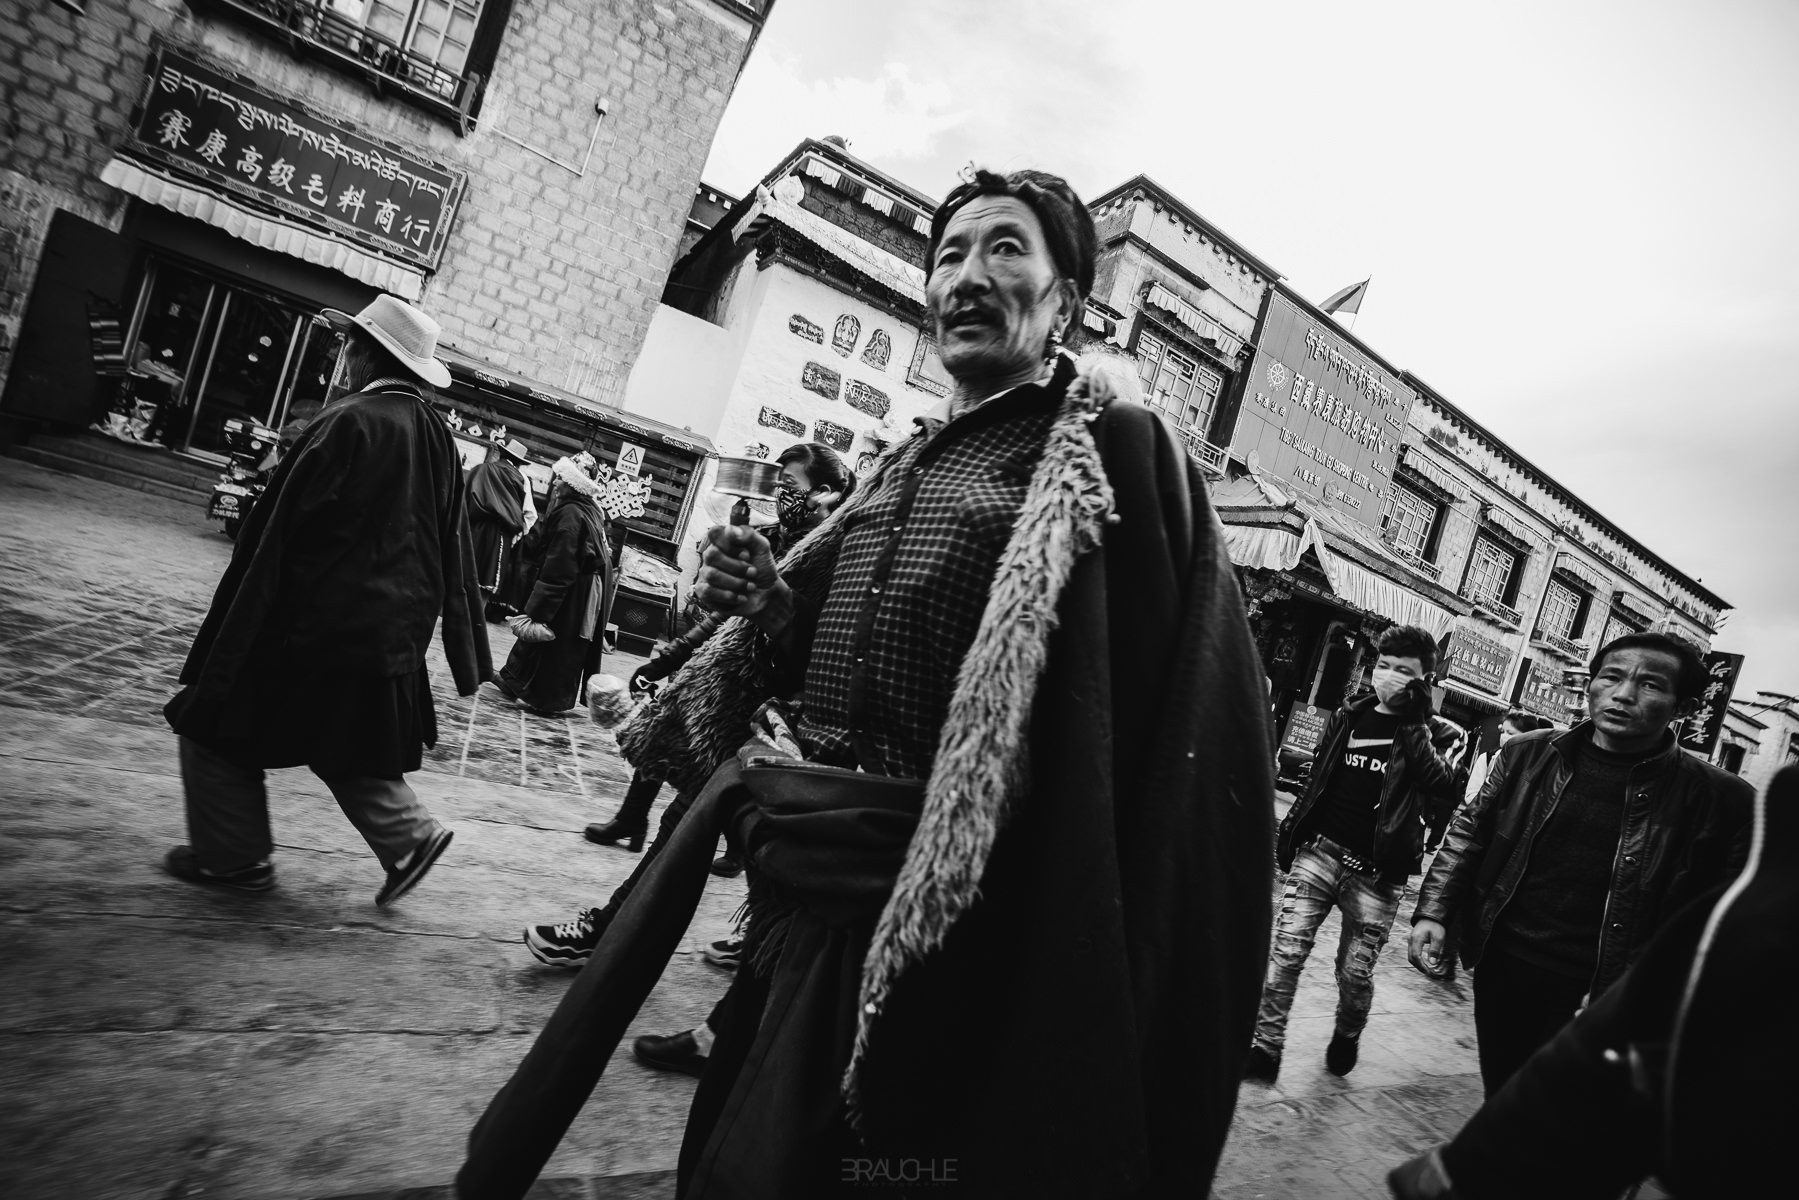 tibet lhasa barkhor street square 0002 - Lhasa - Barkhor Street